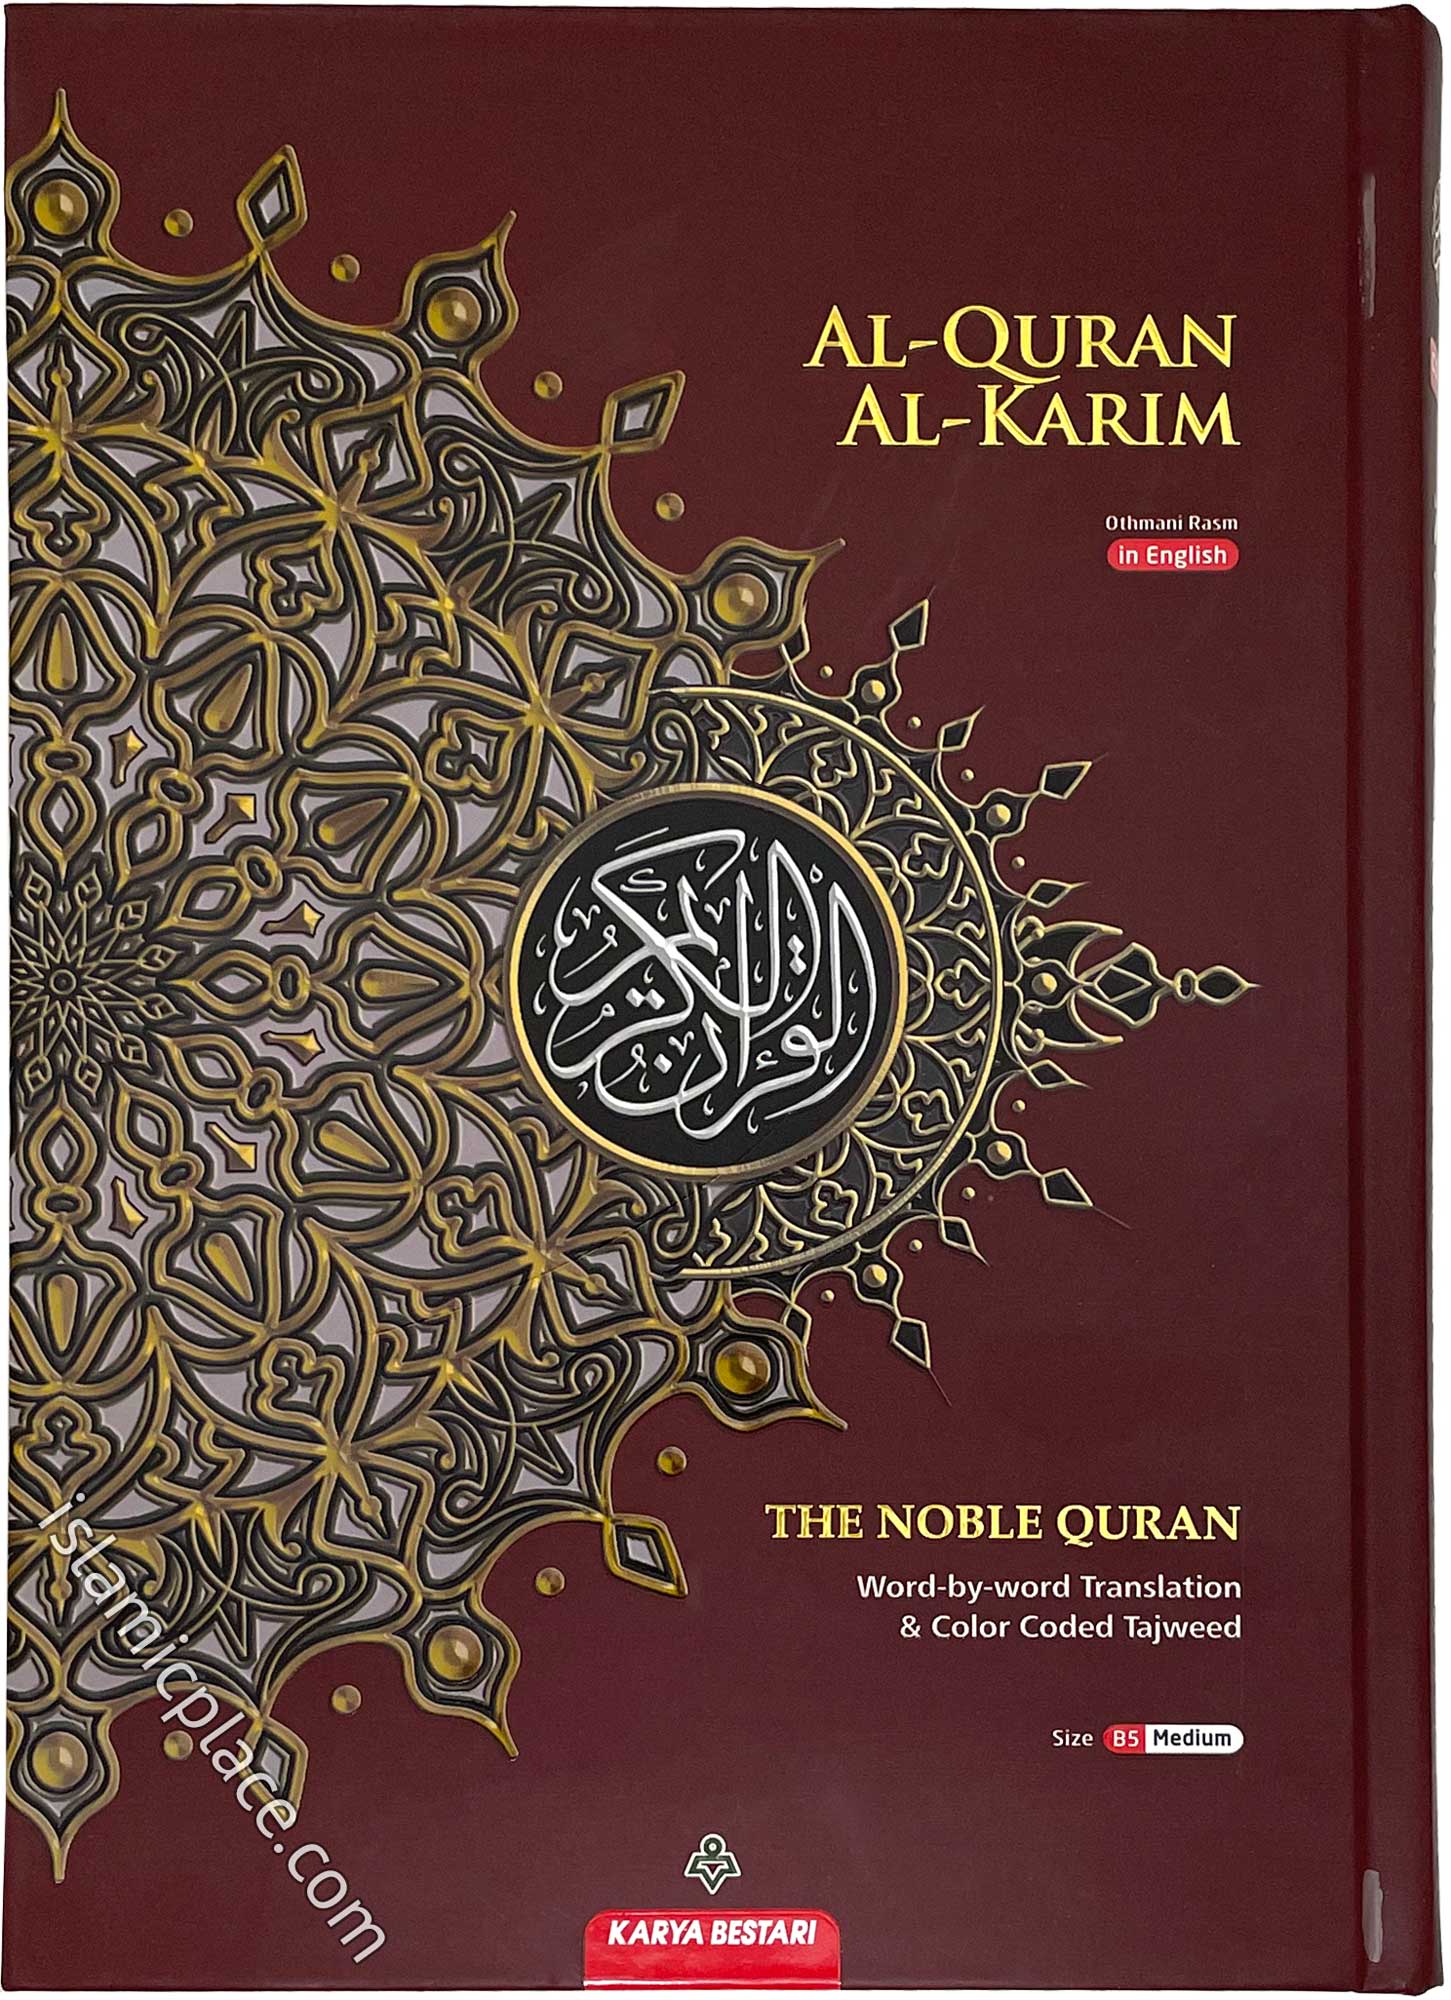 Al-Quran Al-Karim - The Noble Quran Word-by-Word Translation & Color Coded Tajweed Medium 7" x 10"